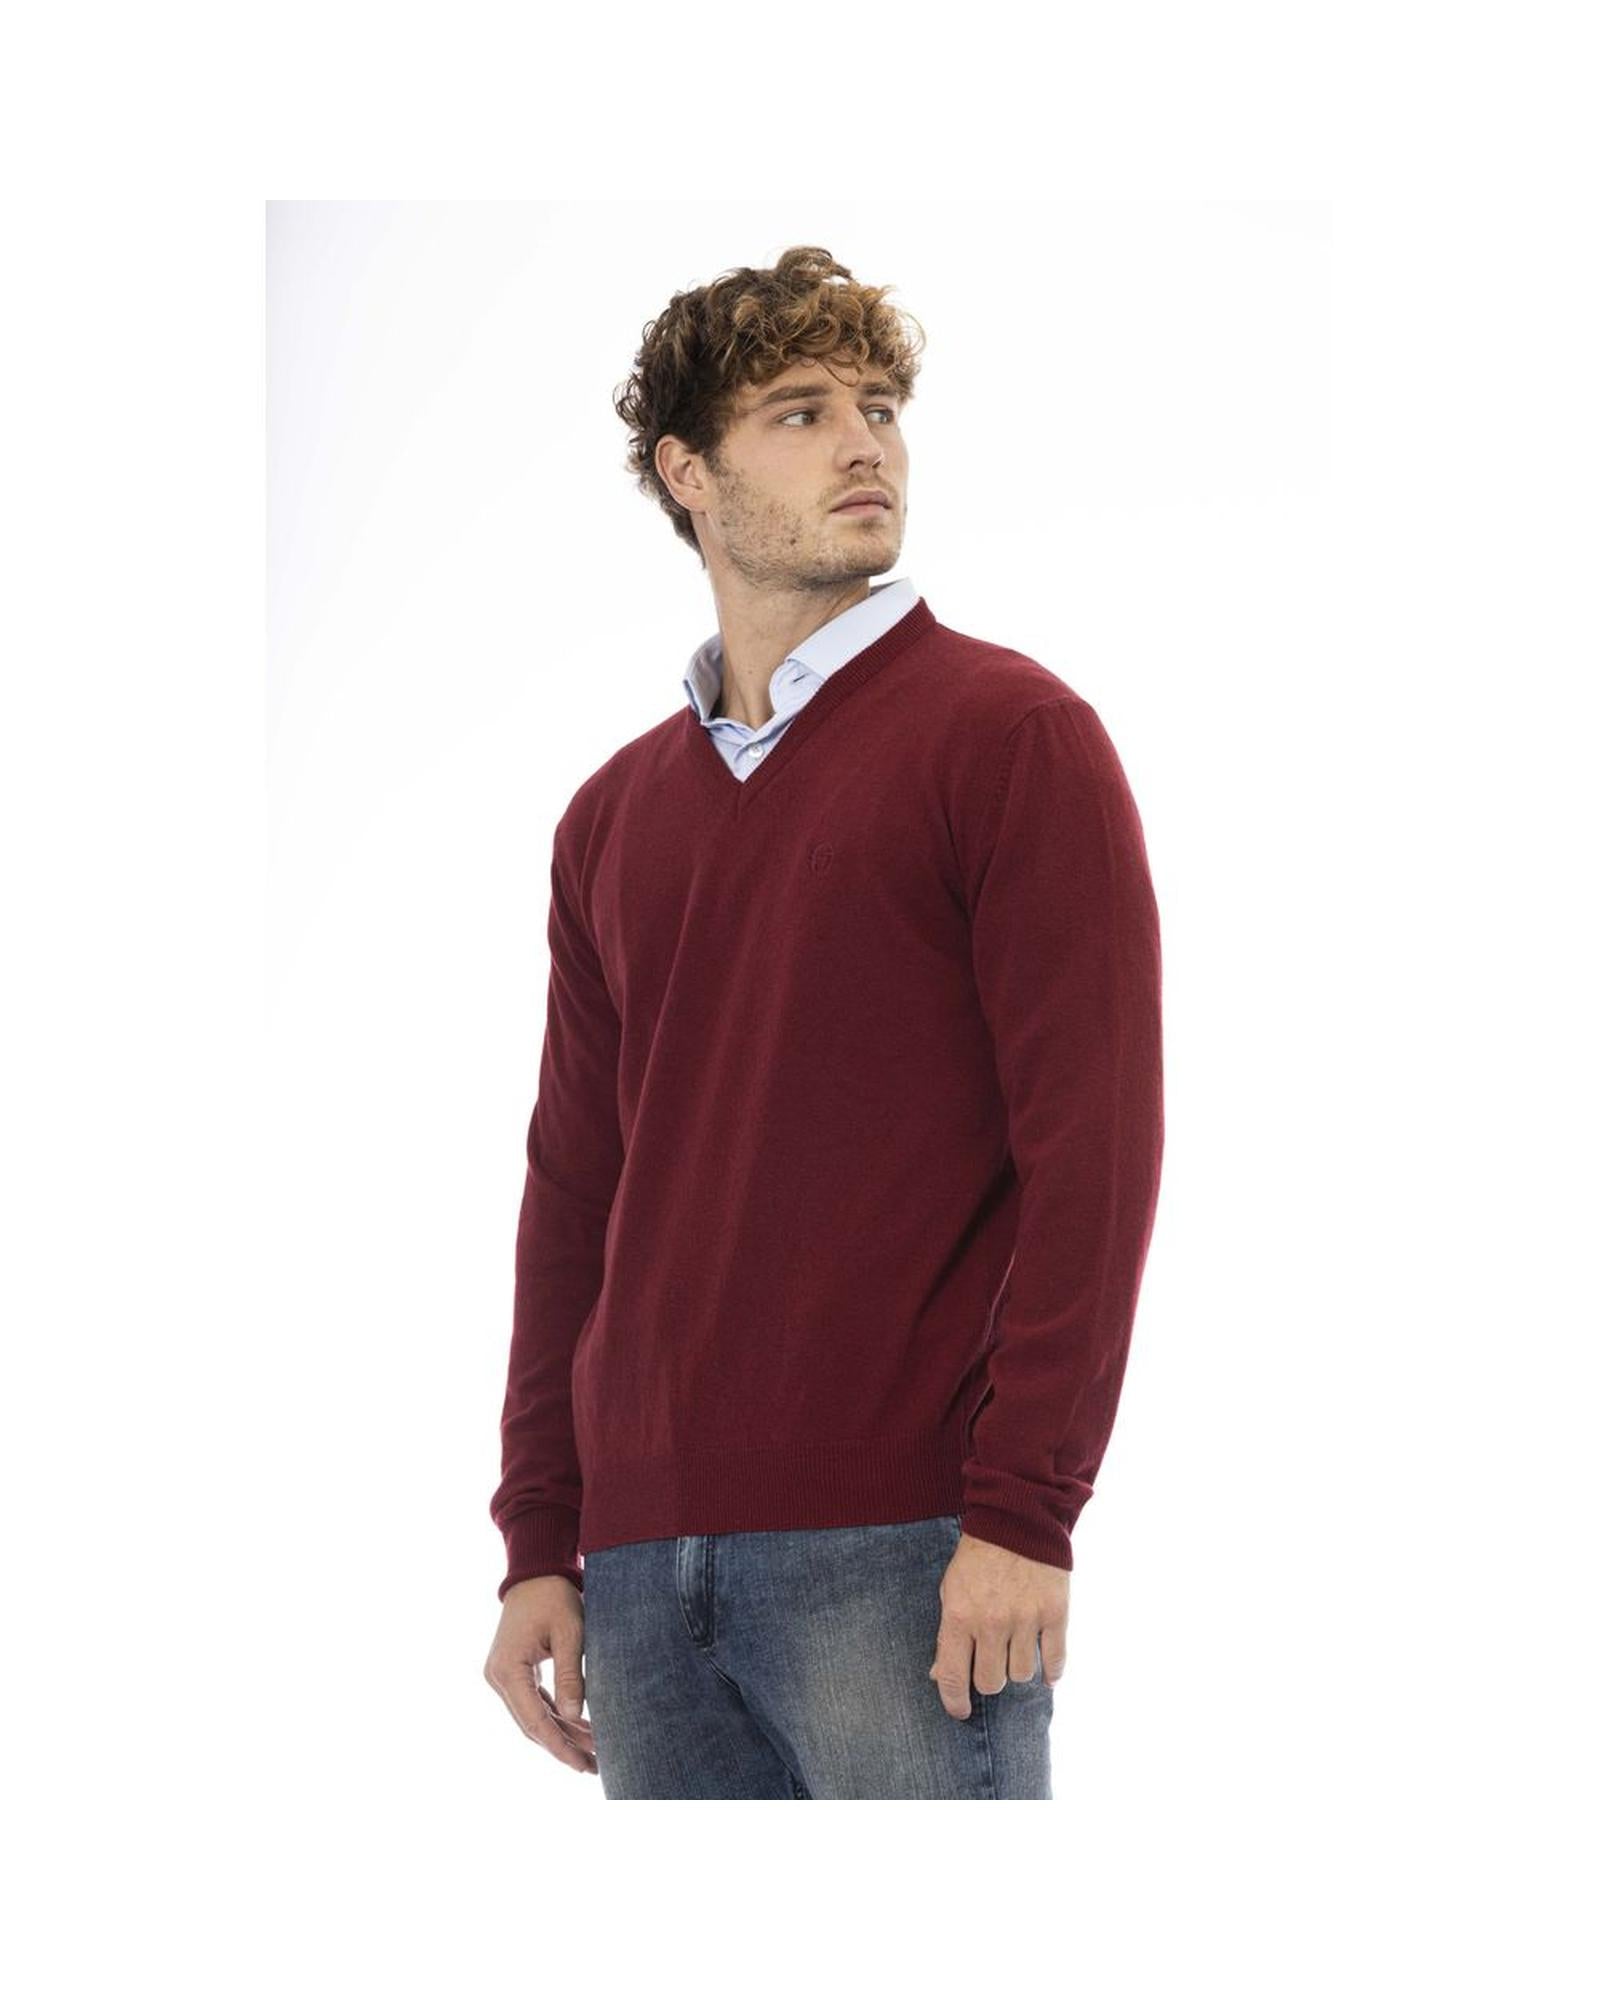 Men's Burgundy Wool Sweater - XL